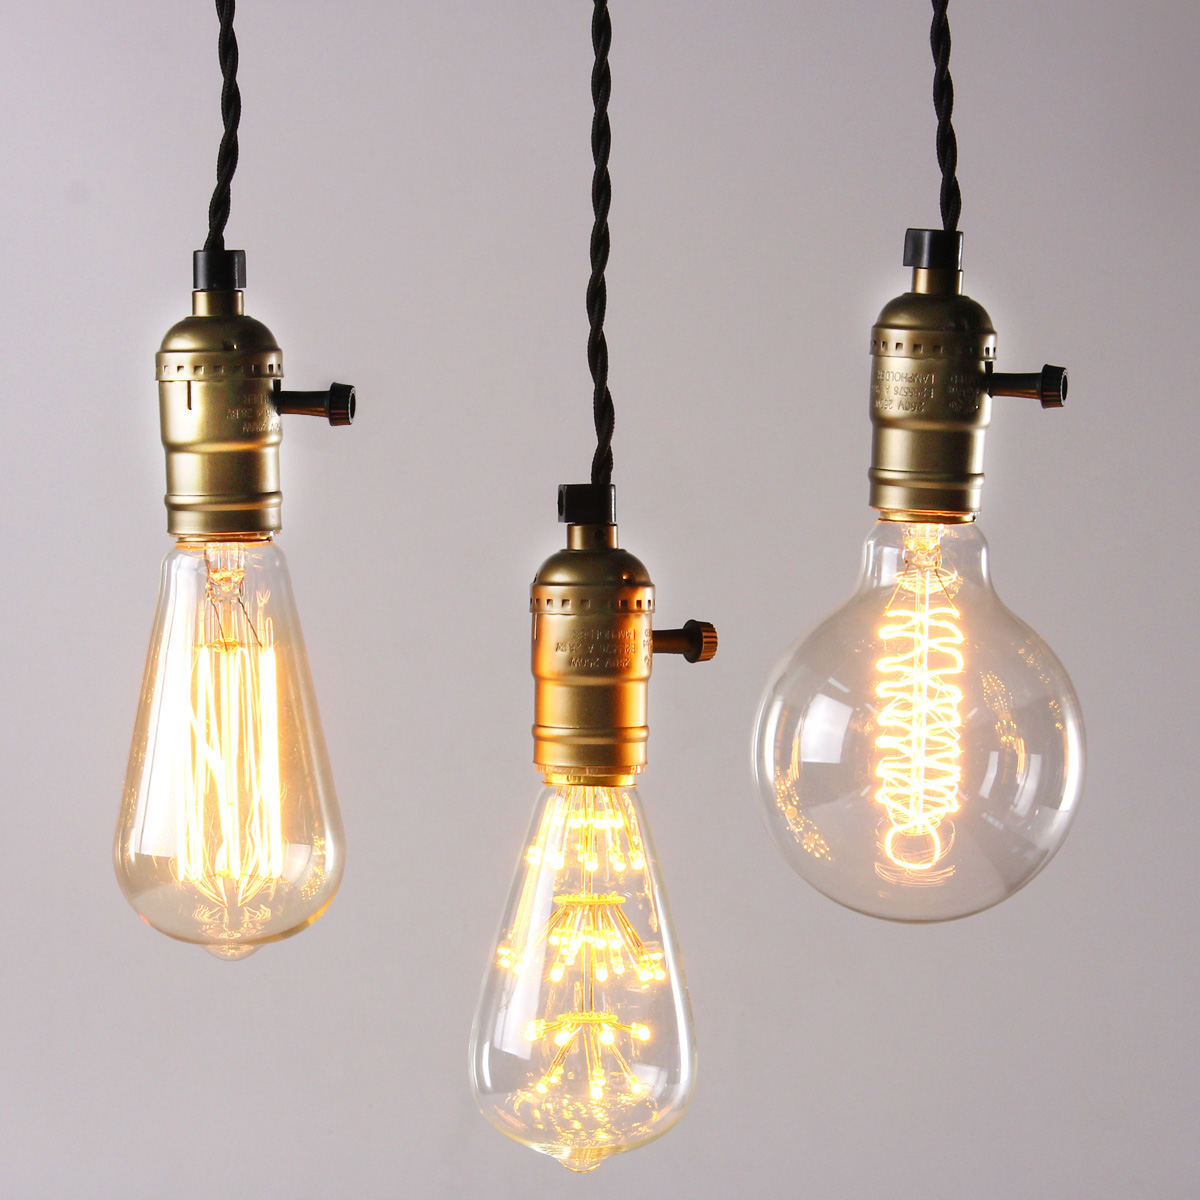 E26/E27 Solid Industrial Triple Lamp Sockets Vintage Edison Hanging Pendant Lamp Holder